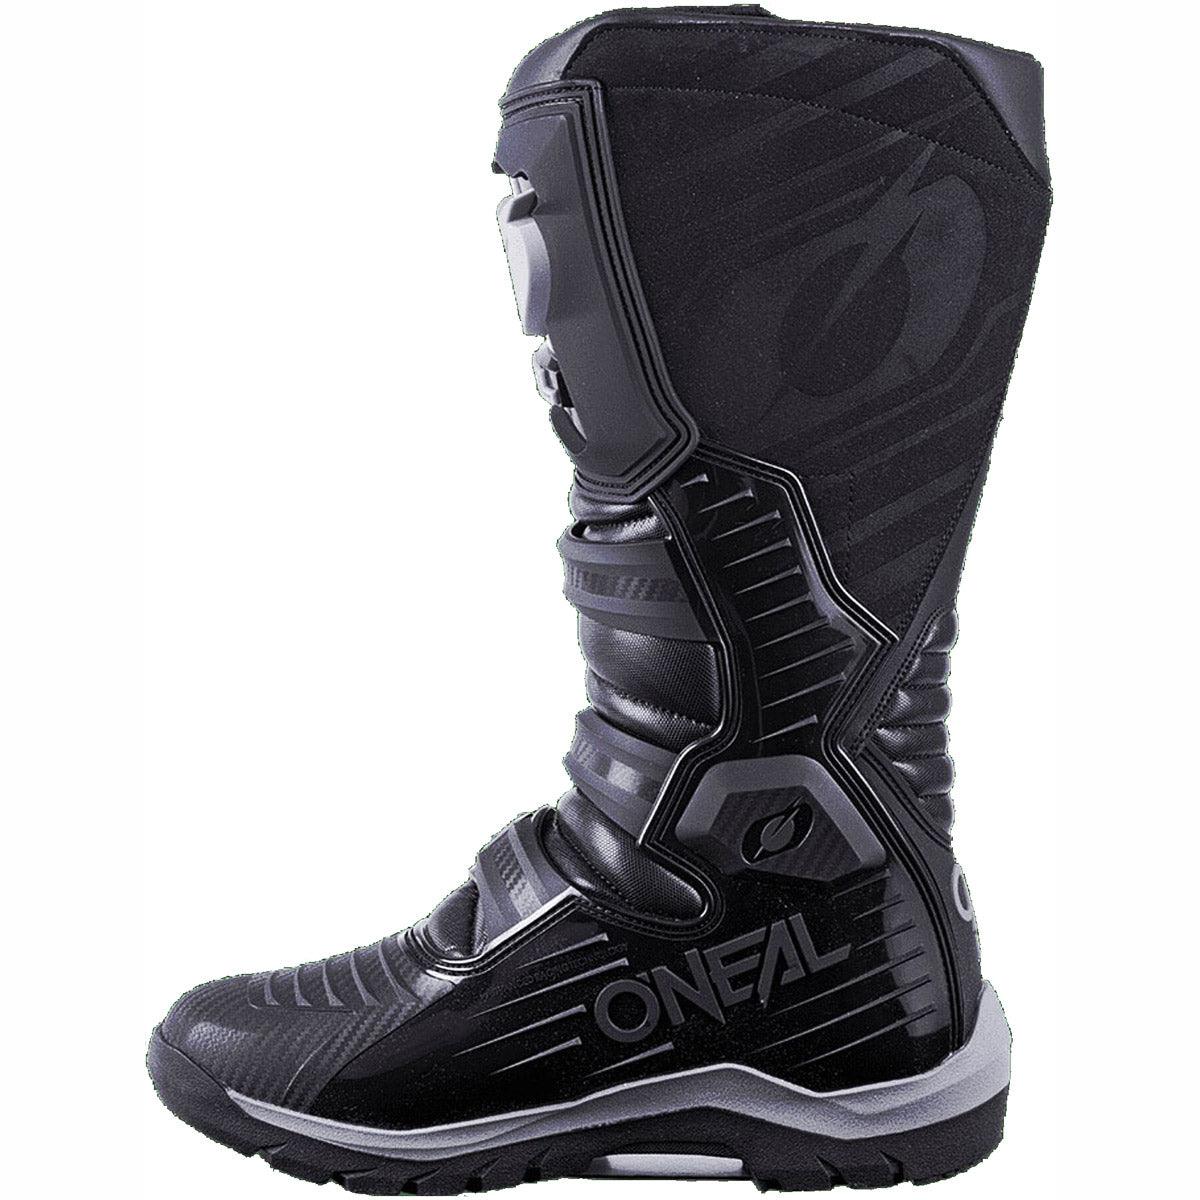 ONeal RMX Enduro Boots - Black - The Motocrosshut